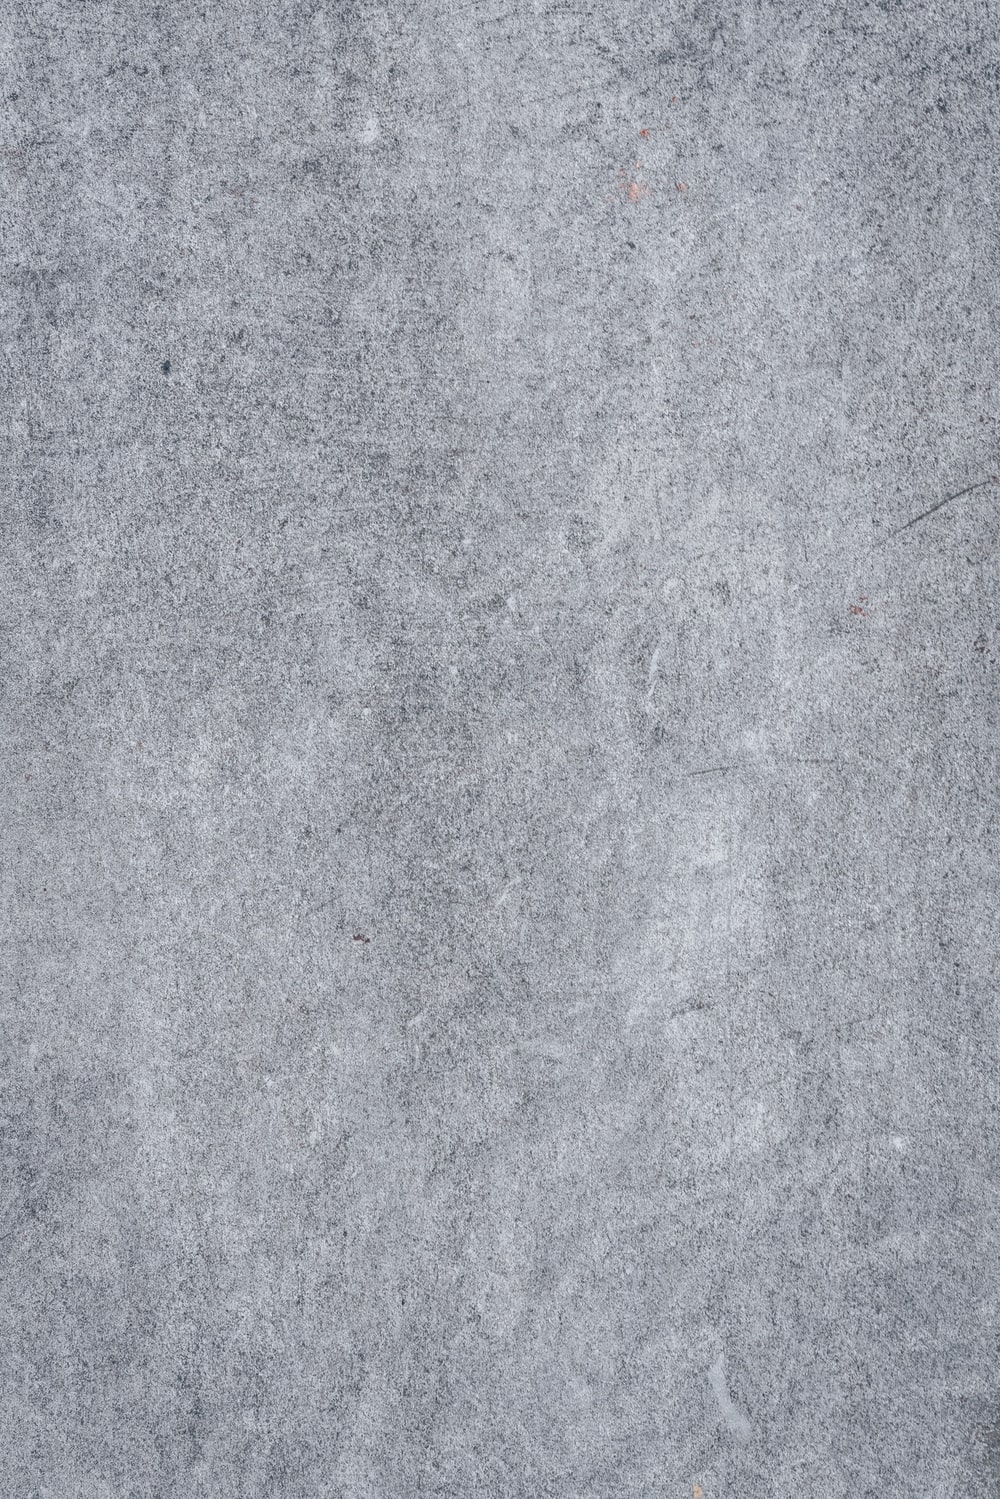 Stone Wallpaper: Free HD Download [HQ]